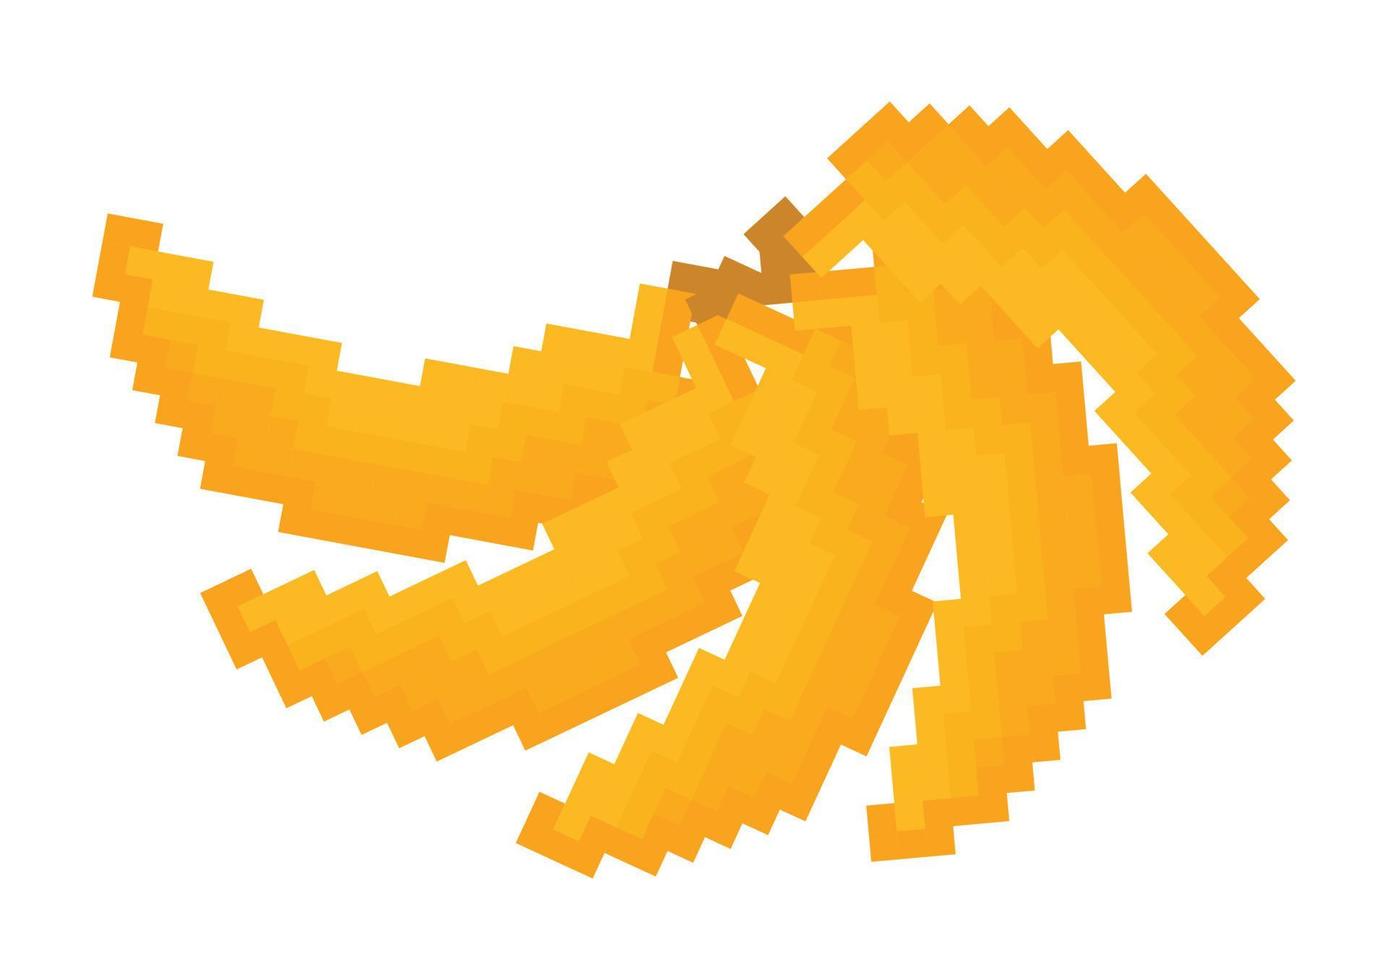 banana illustration with pixel theme 2 vector